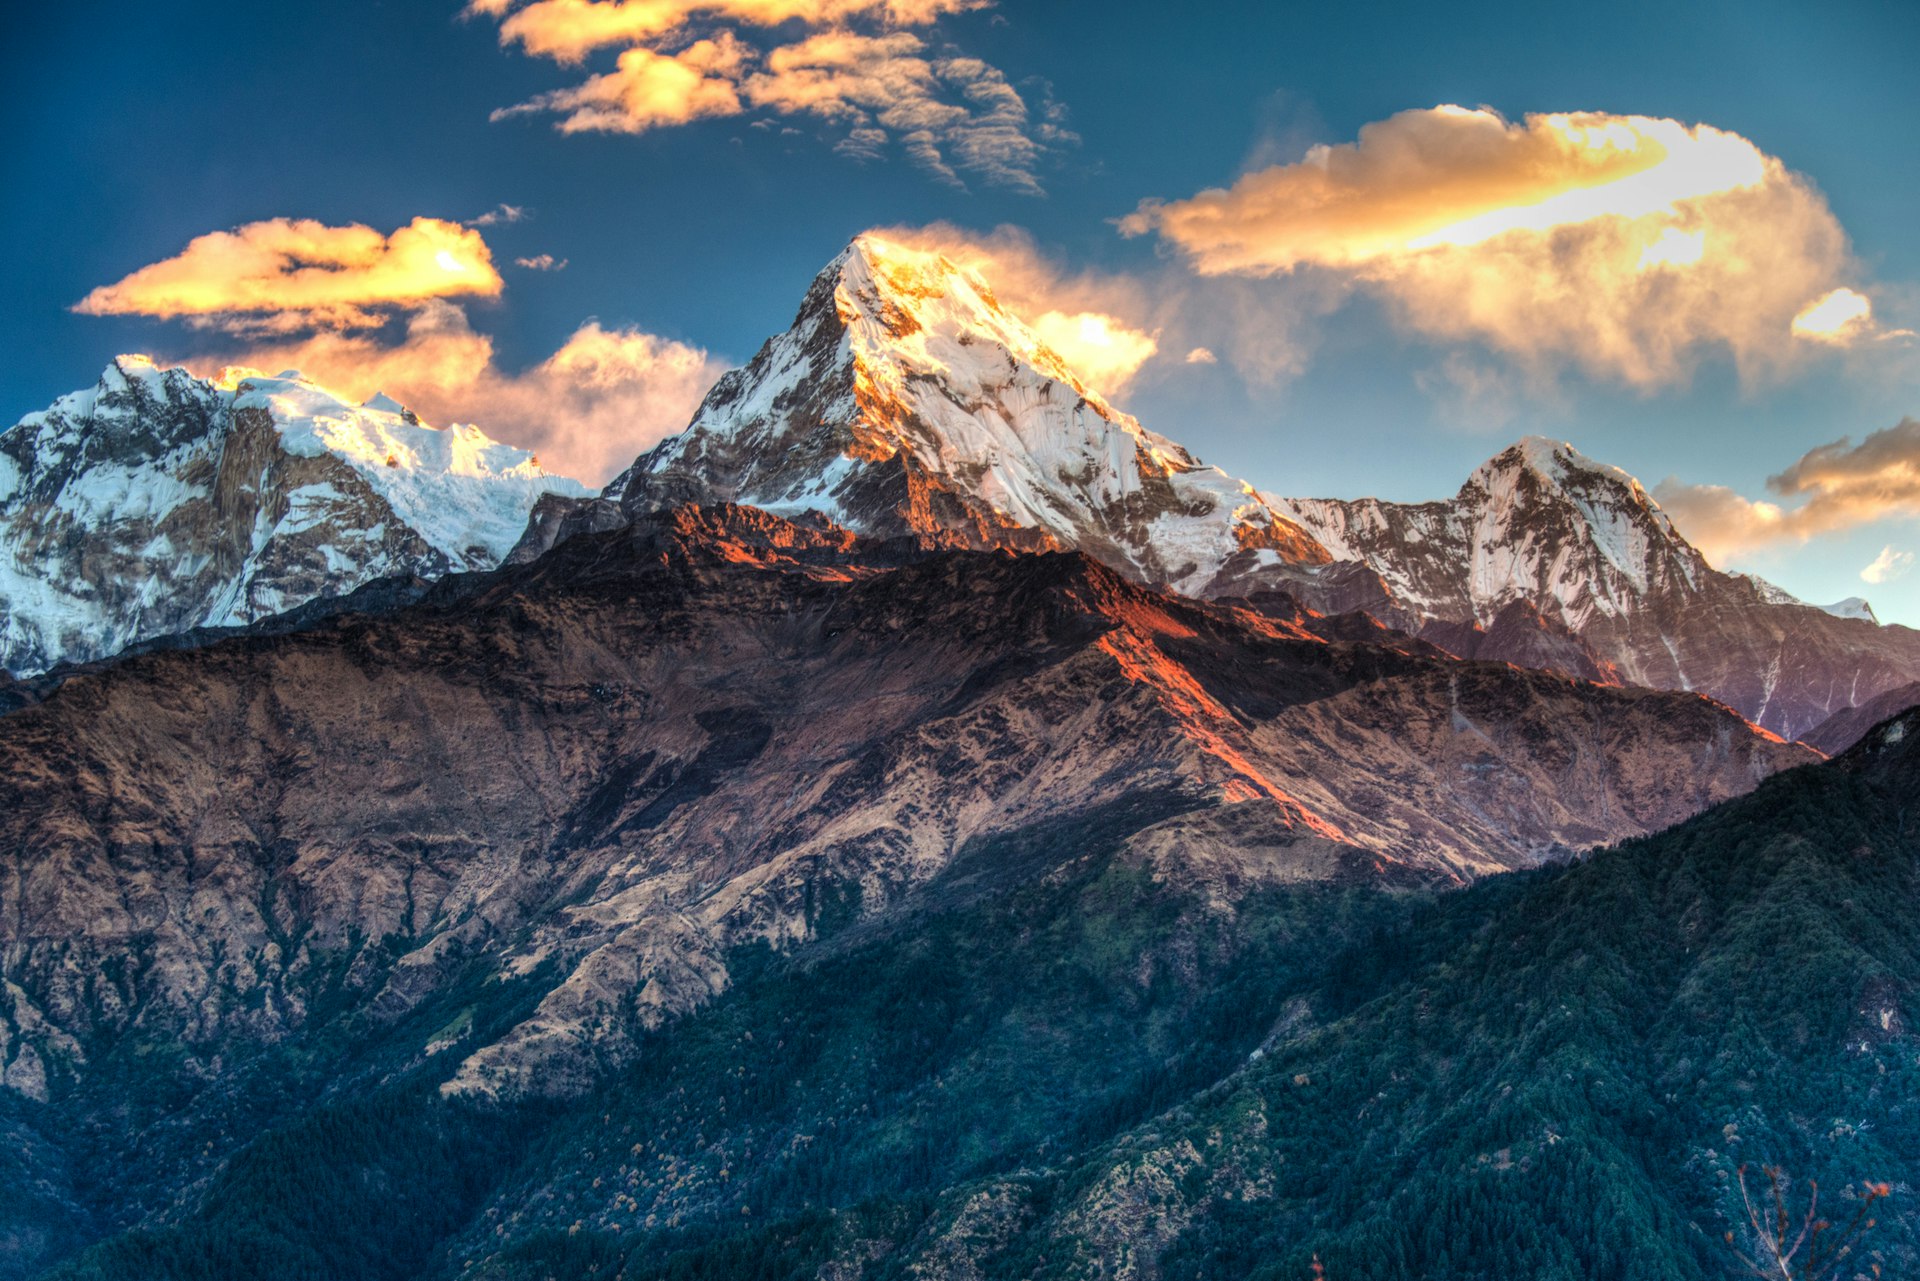 Annapurna mountains range of the Himalayas